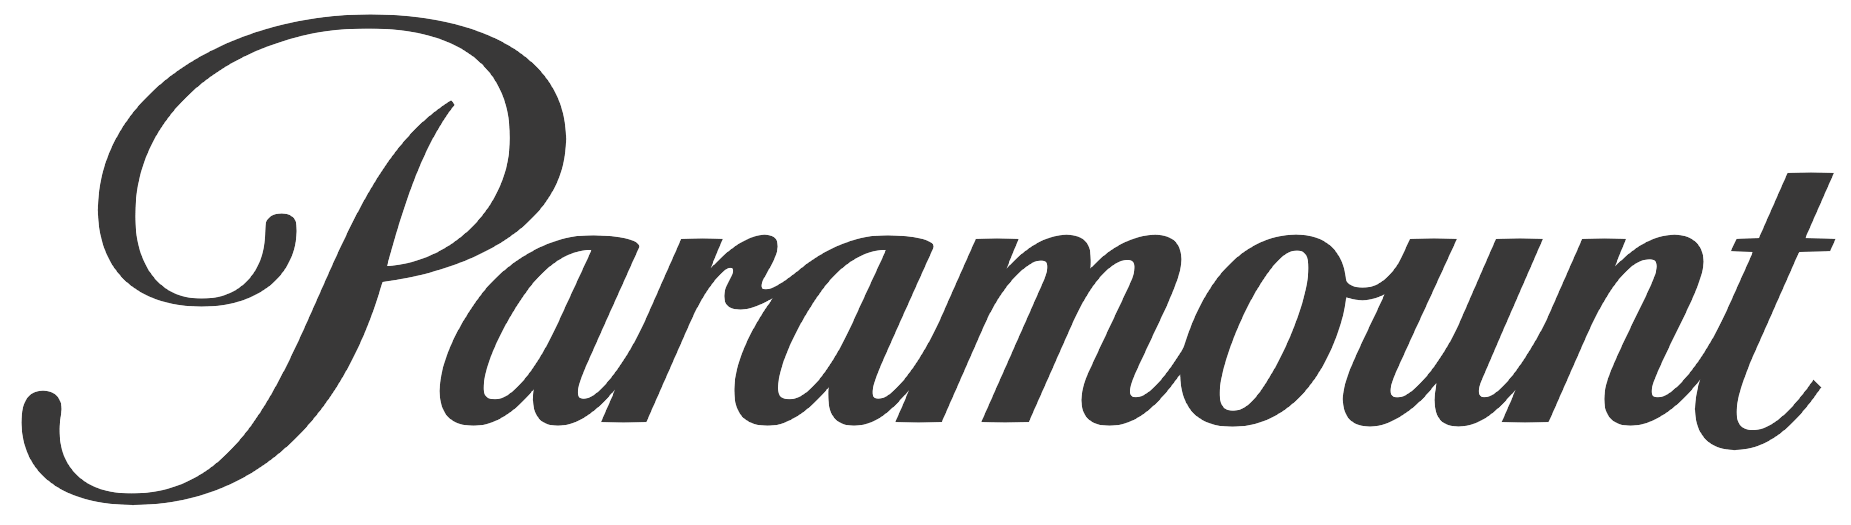 Paramount Logo - Paramount Pictures Logo Vector Free Download